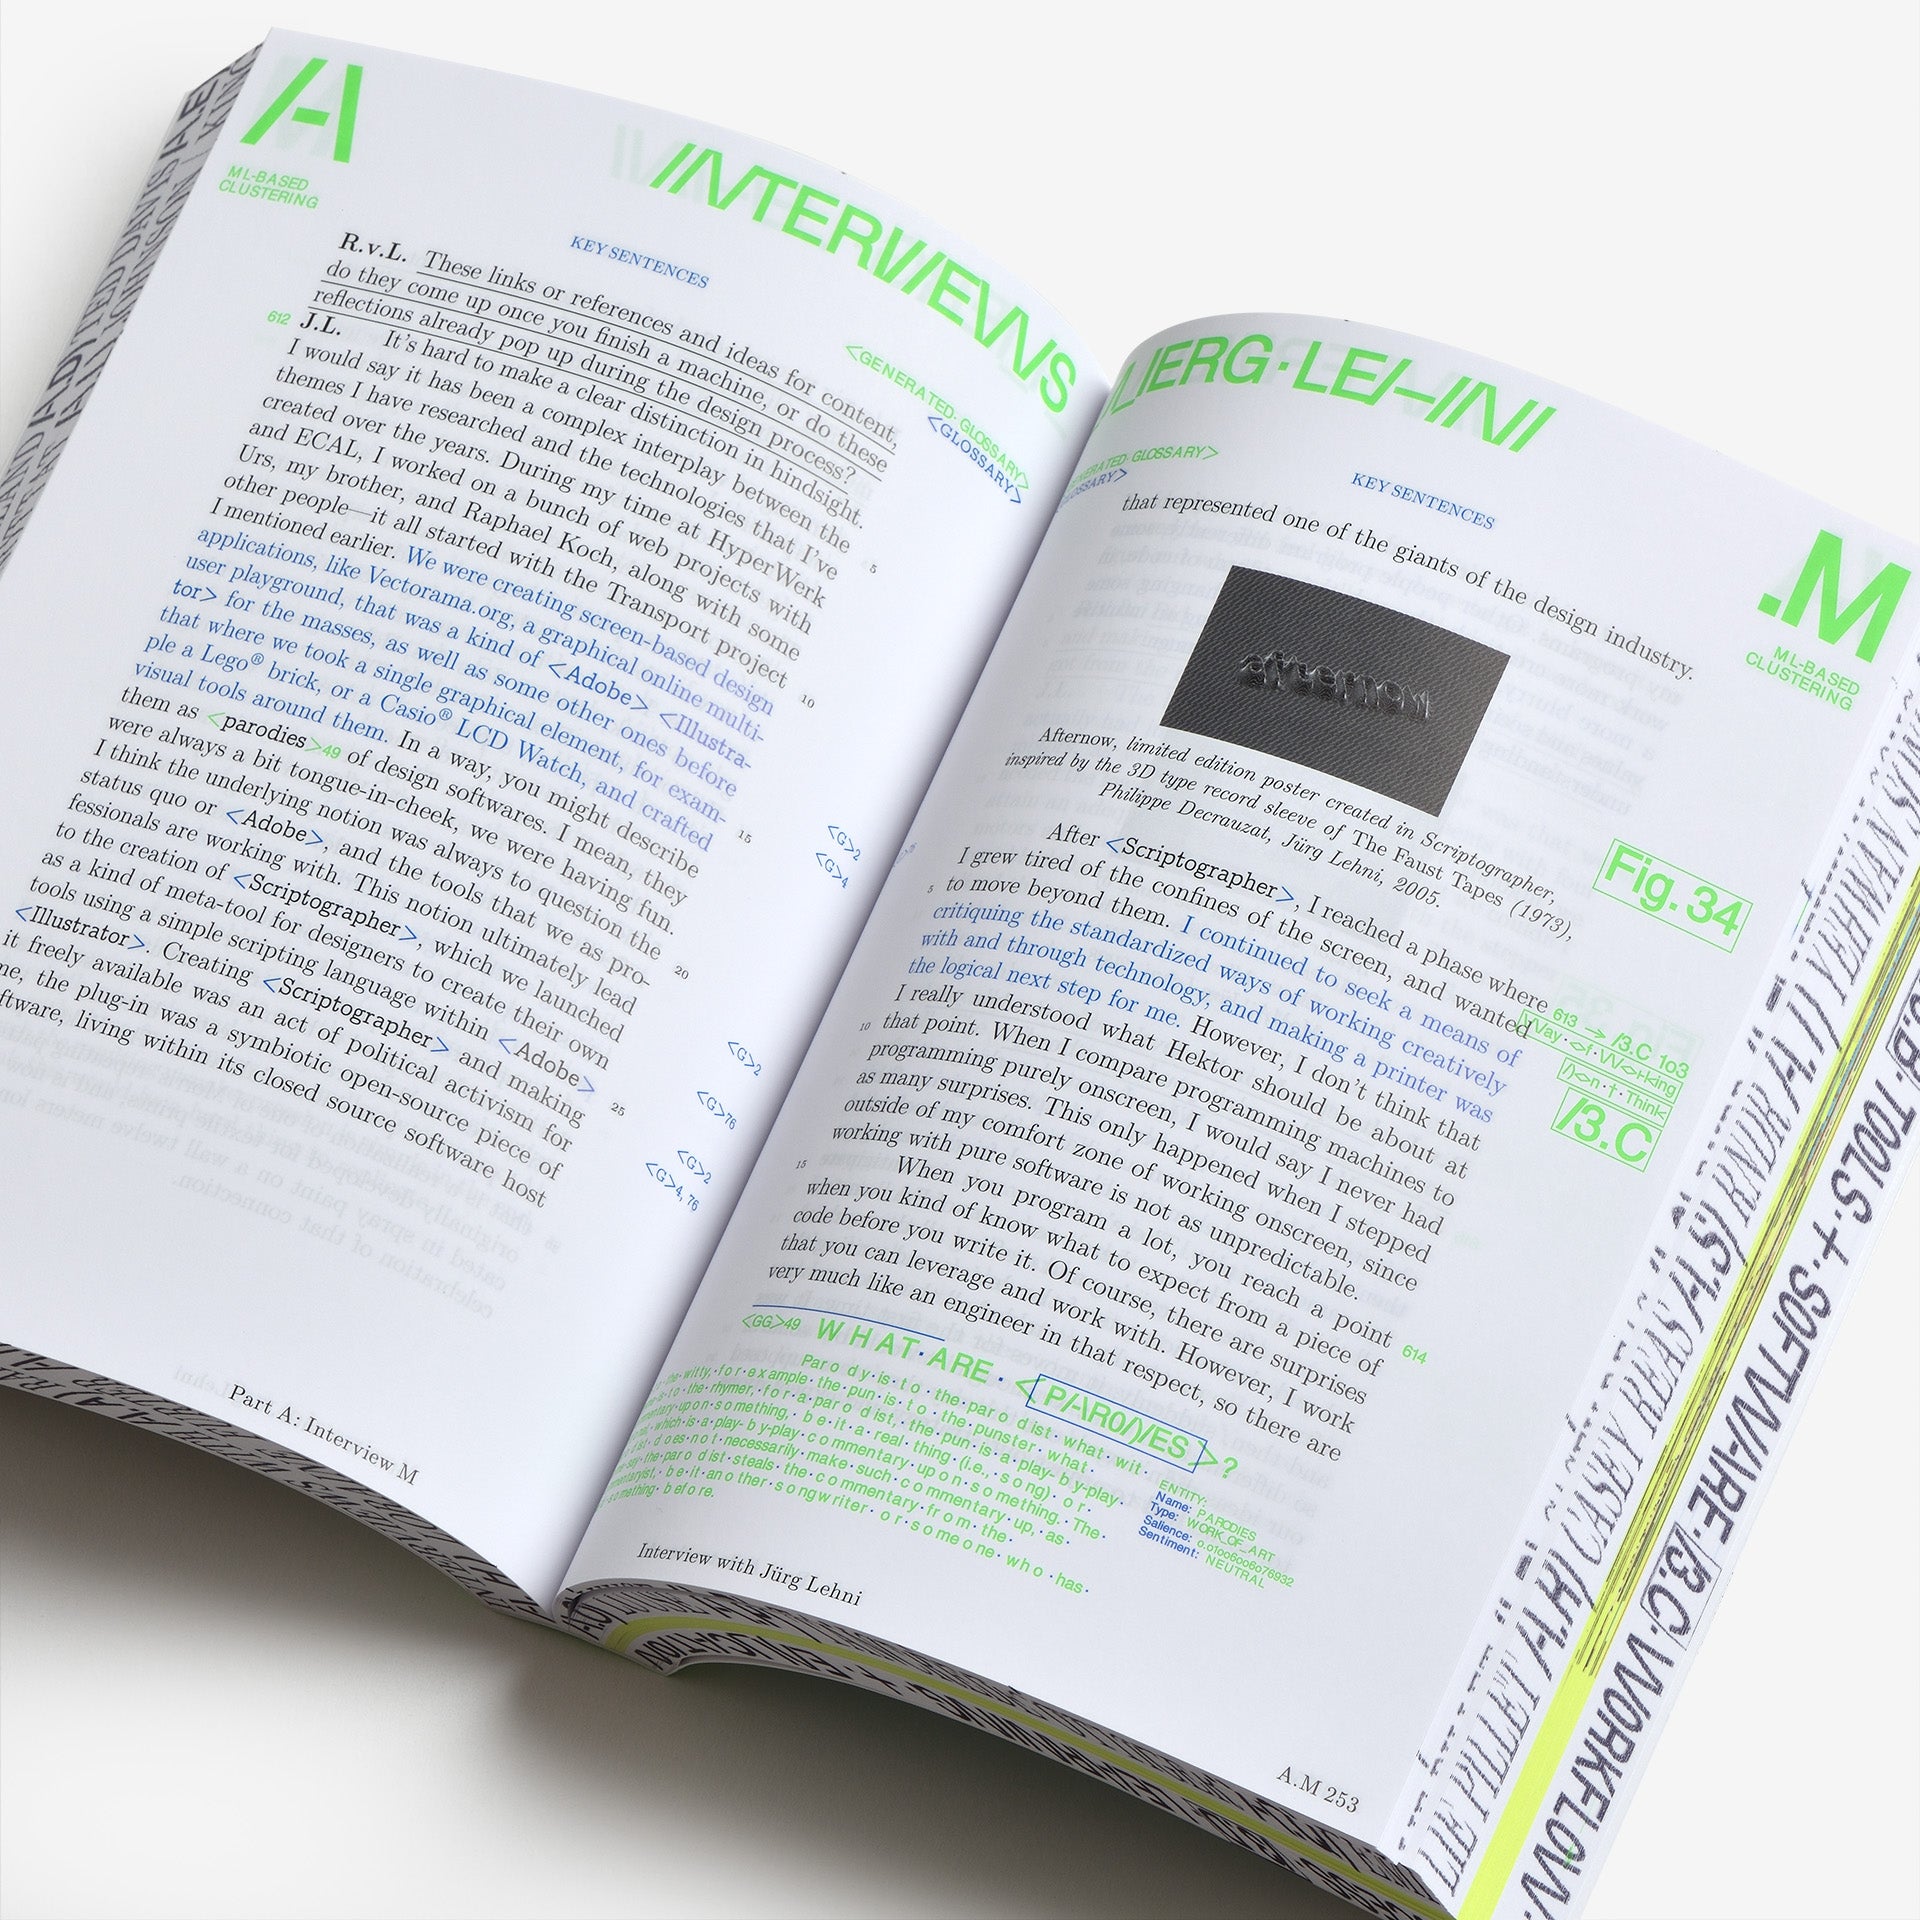 Graphic Design in the Post-Digital Age (Reprint)